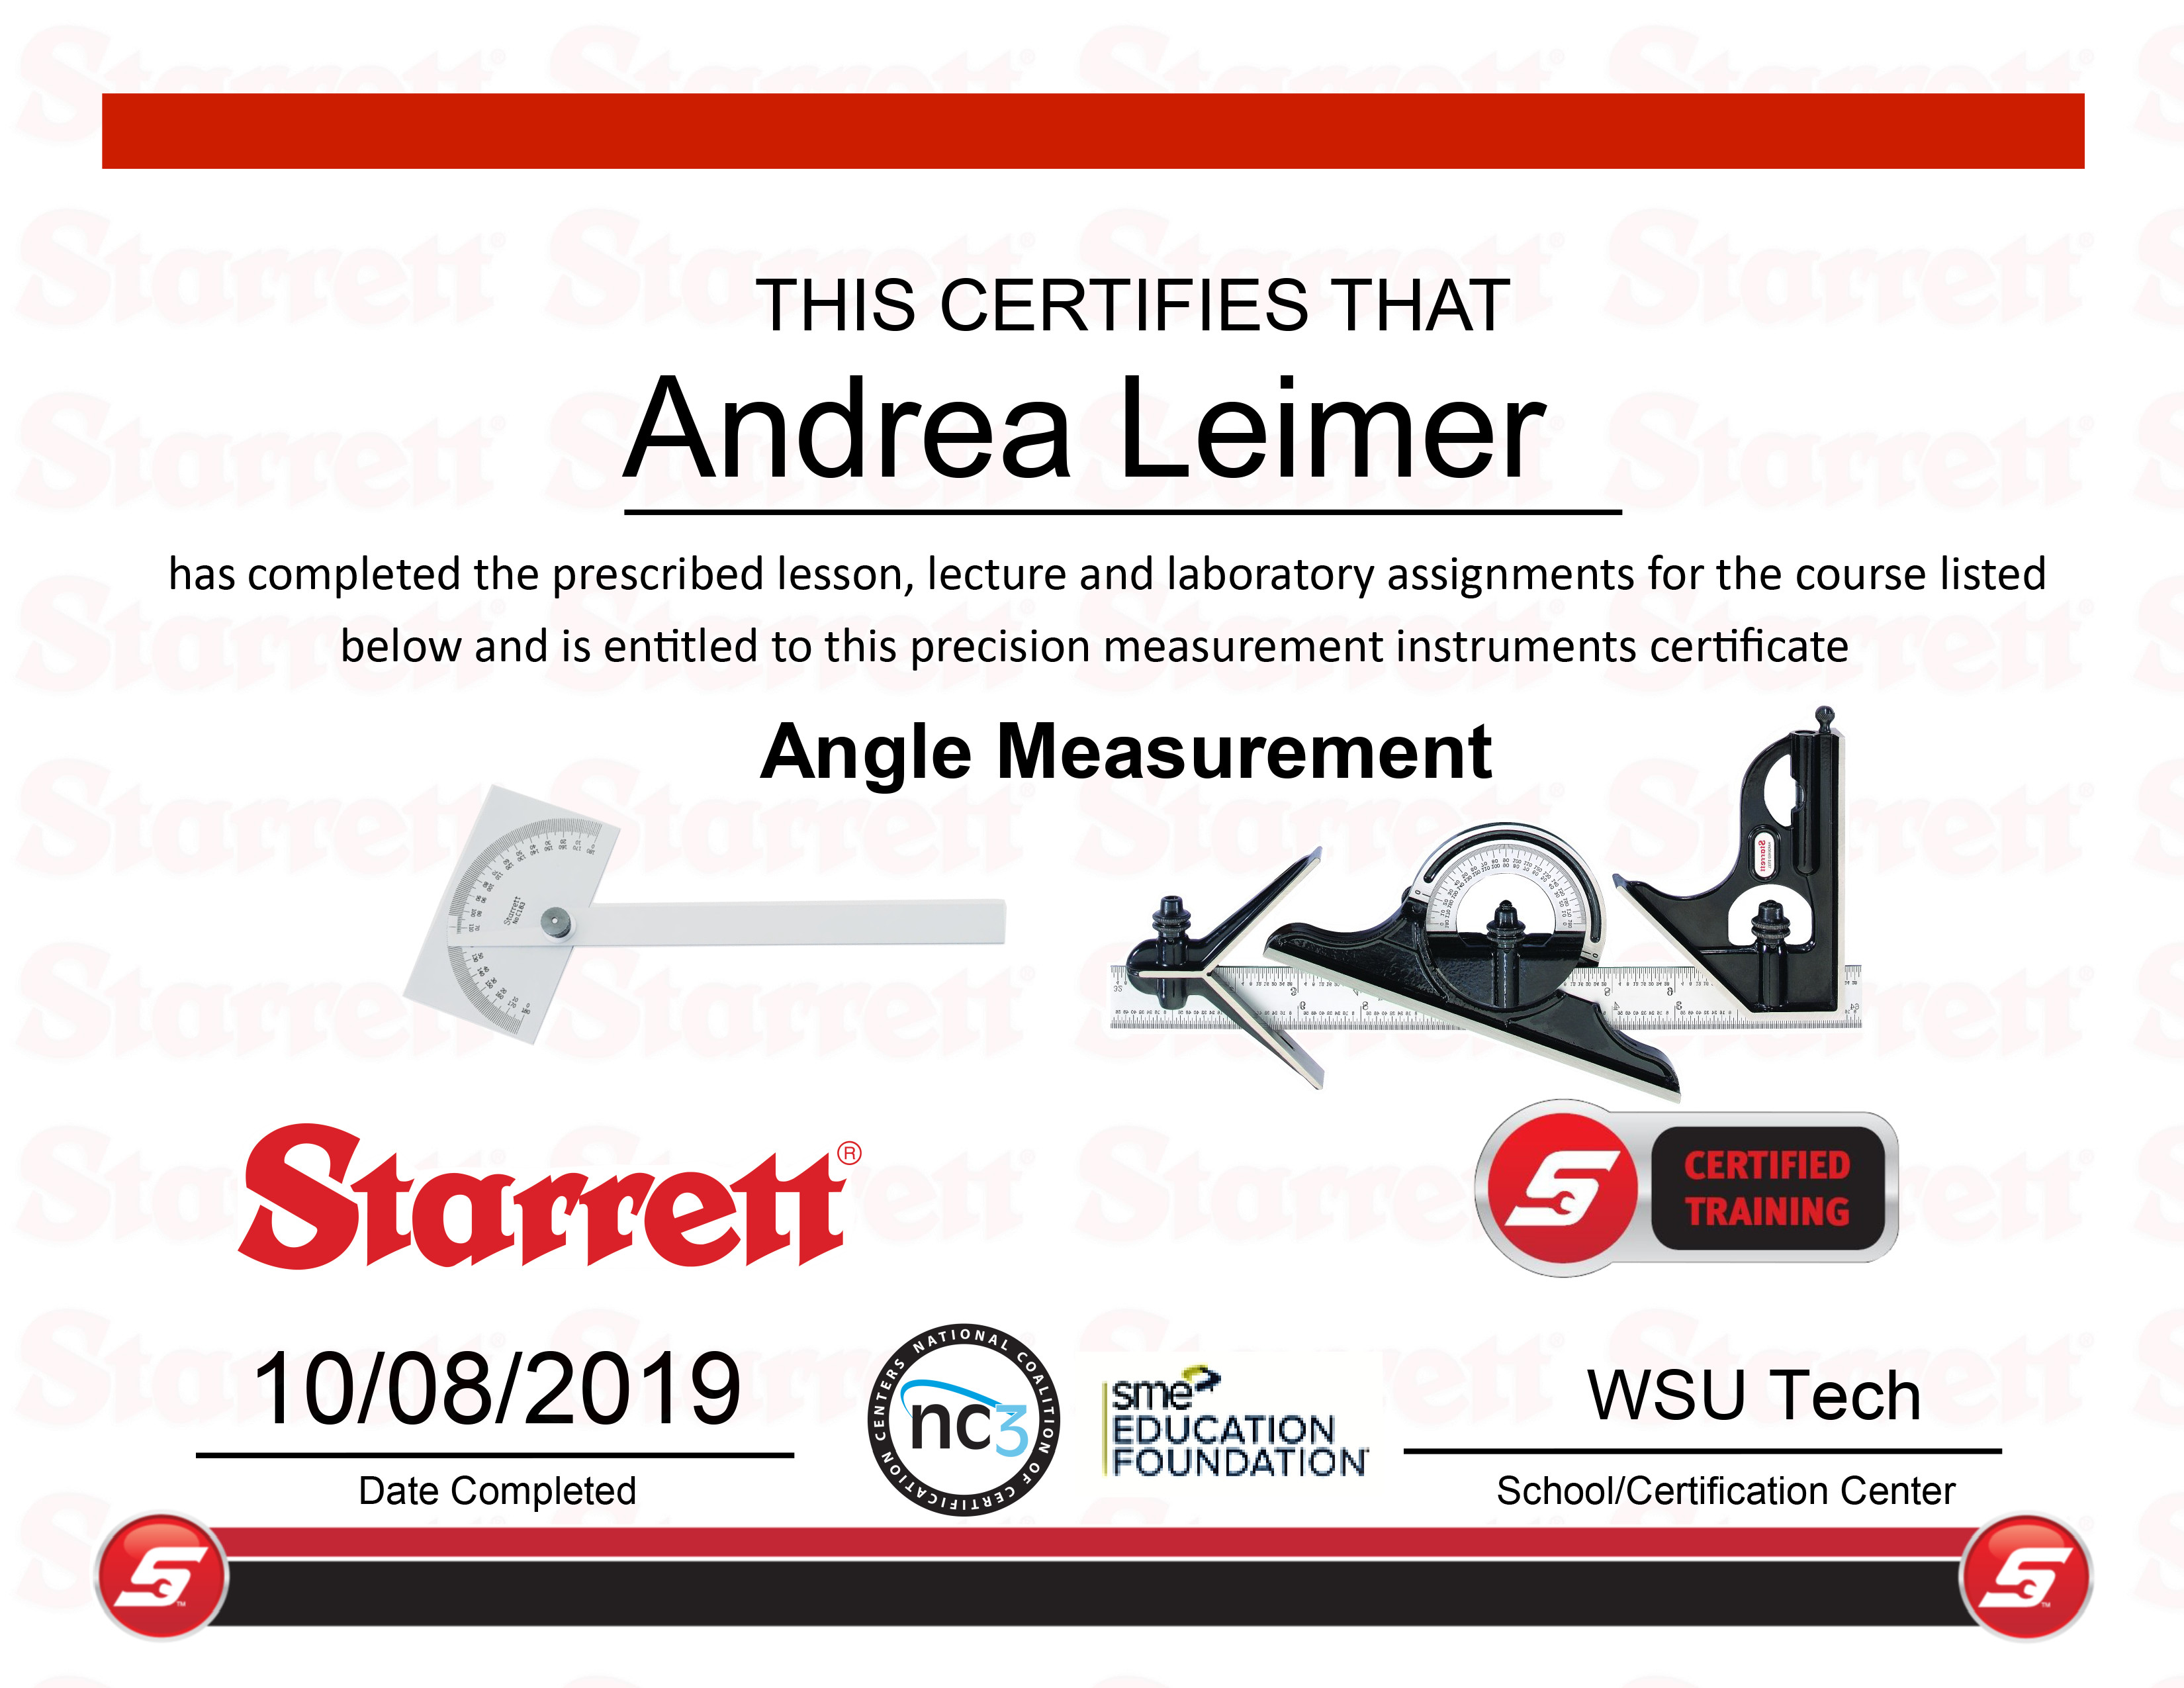 Angle Measurement Certification